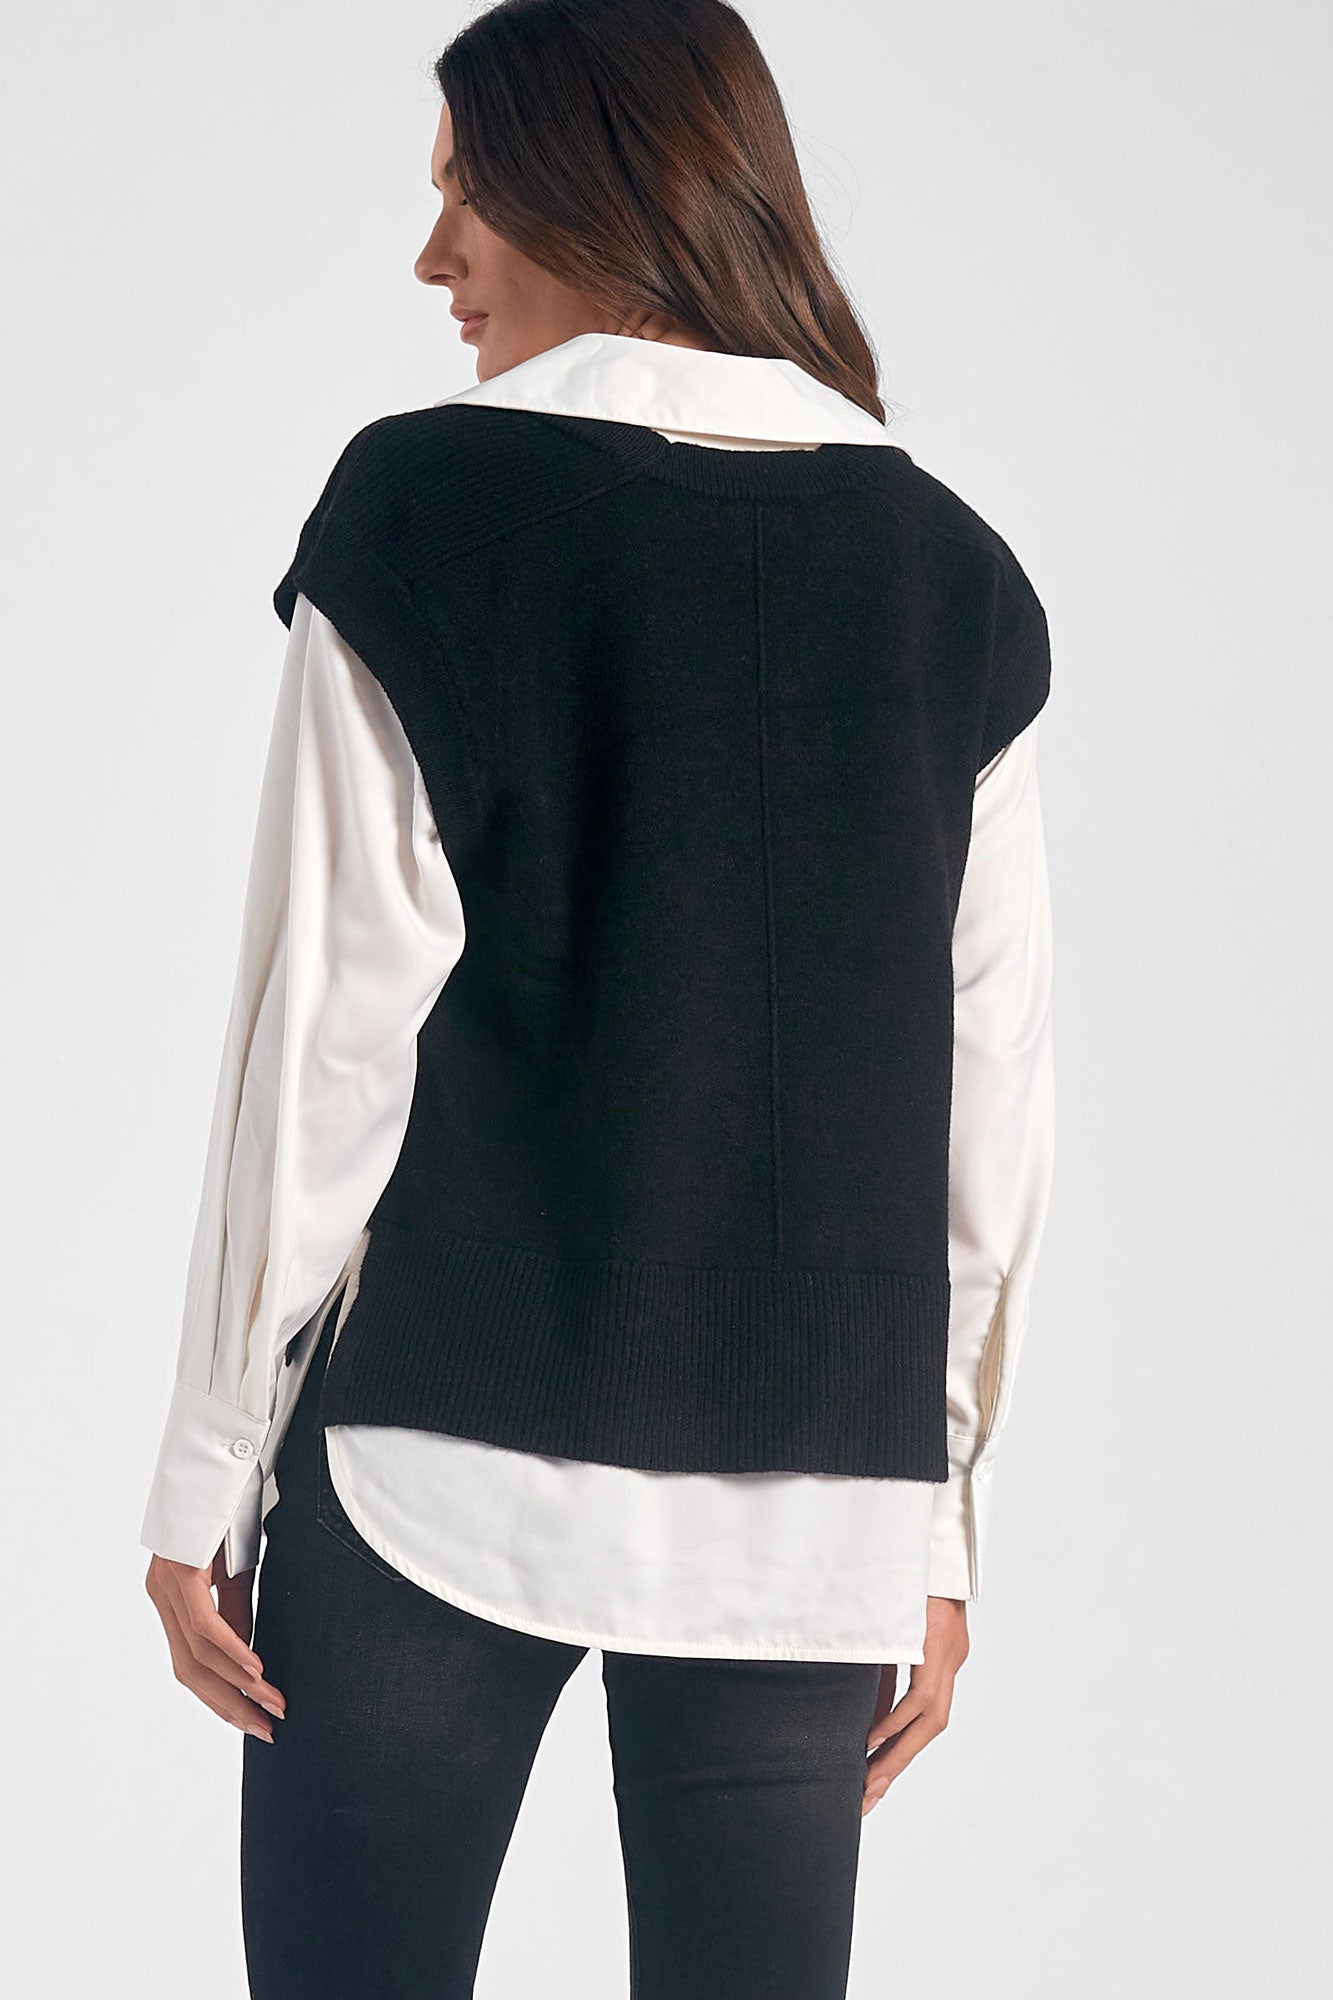 Sweater Vest/Shirt Combo